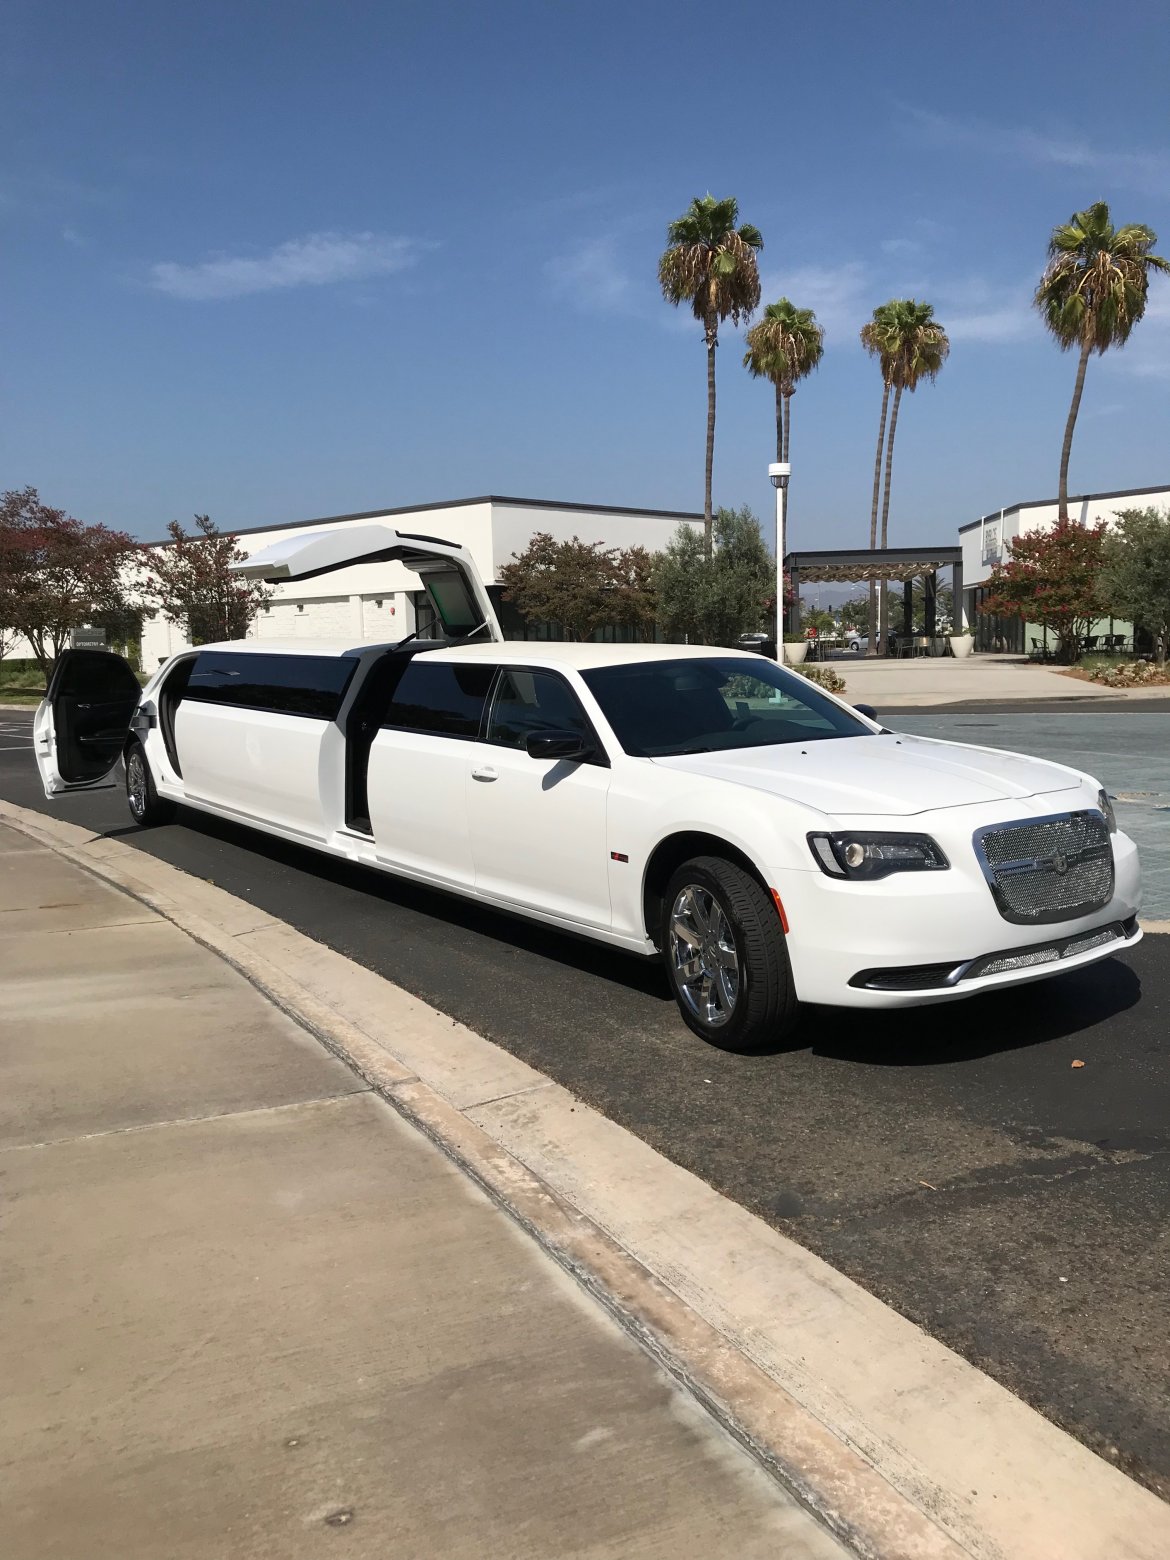 Limousine for sale: 2018 Chrysler 300 by SPV